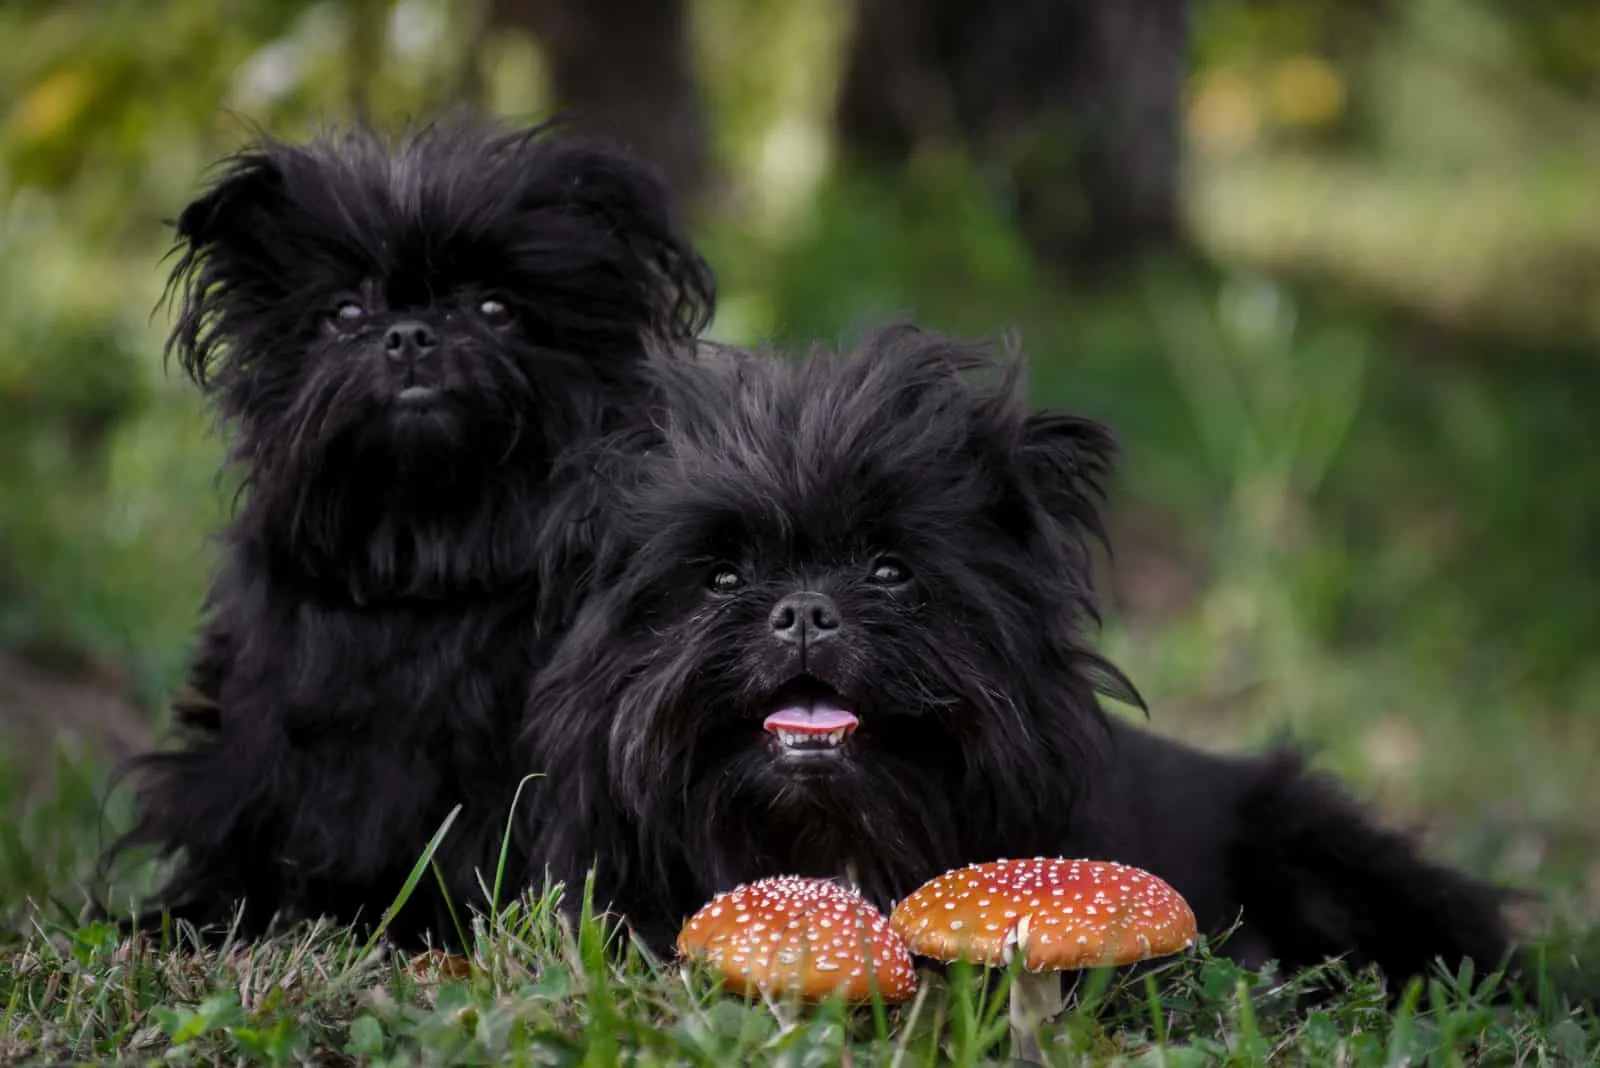 two Affenpinscher dogs sitting in grass